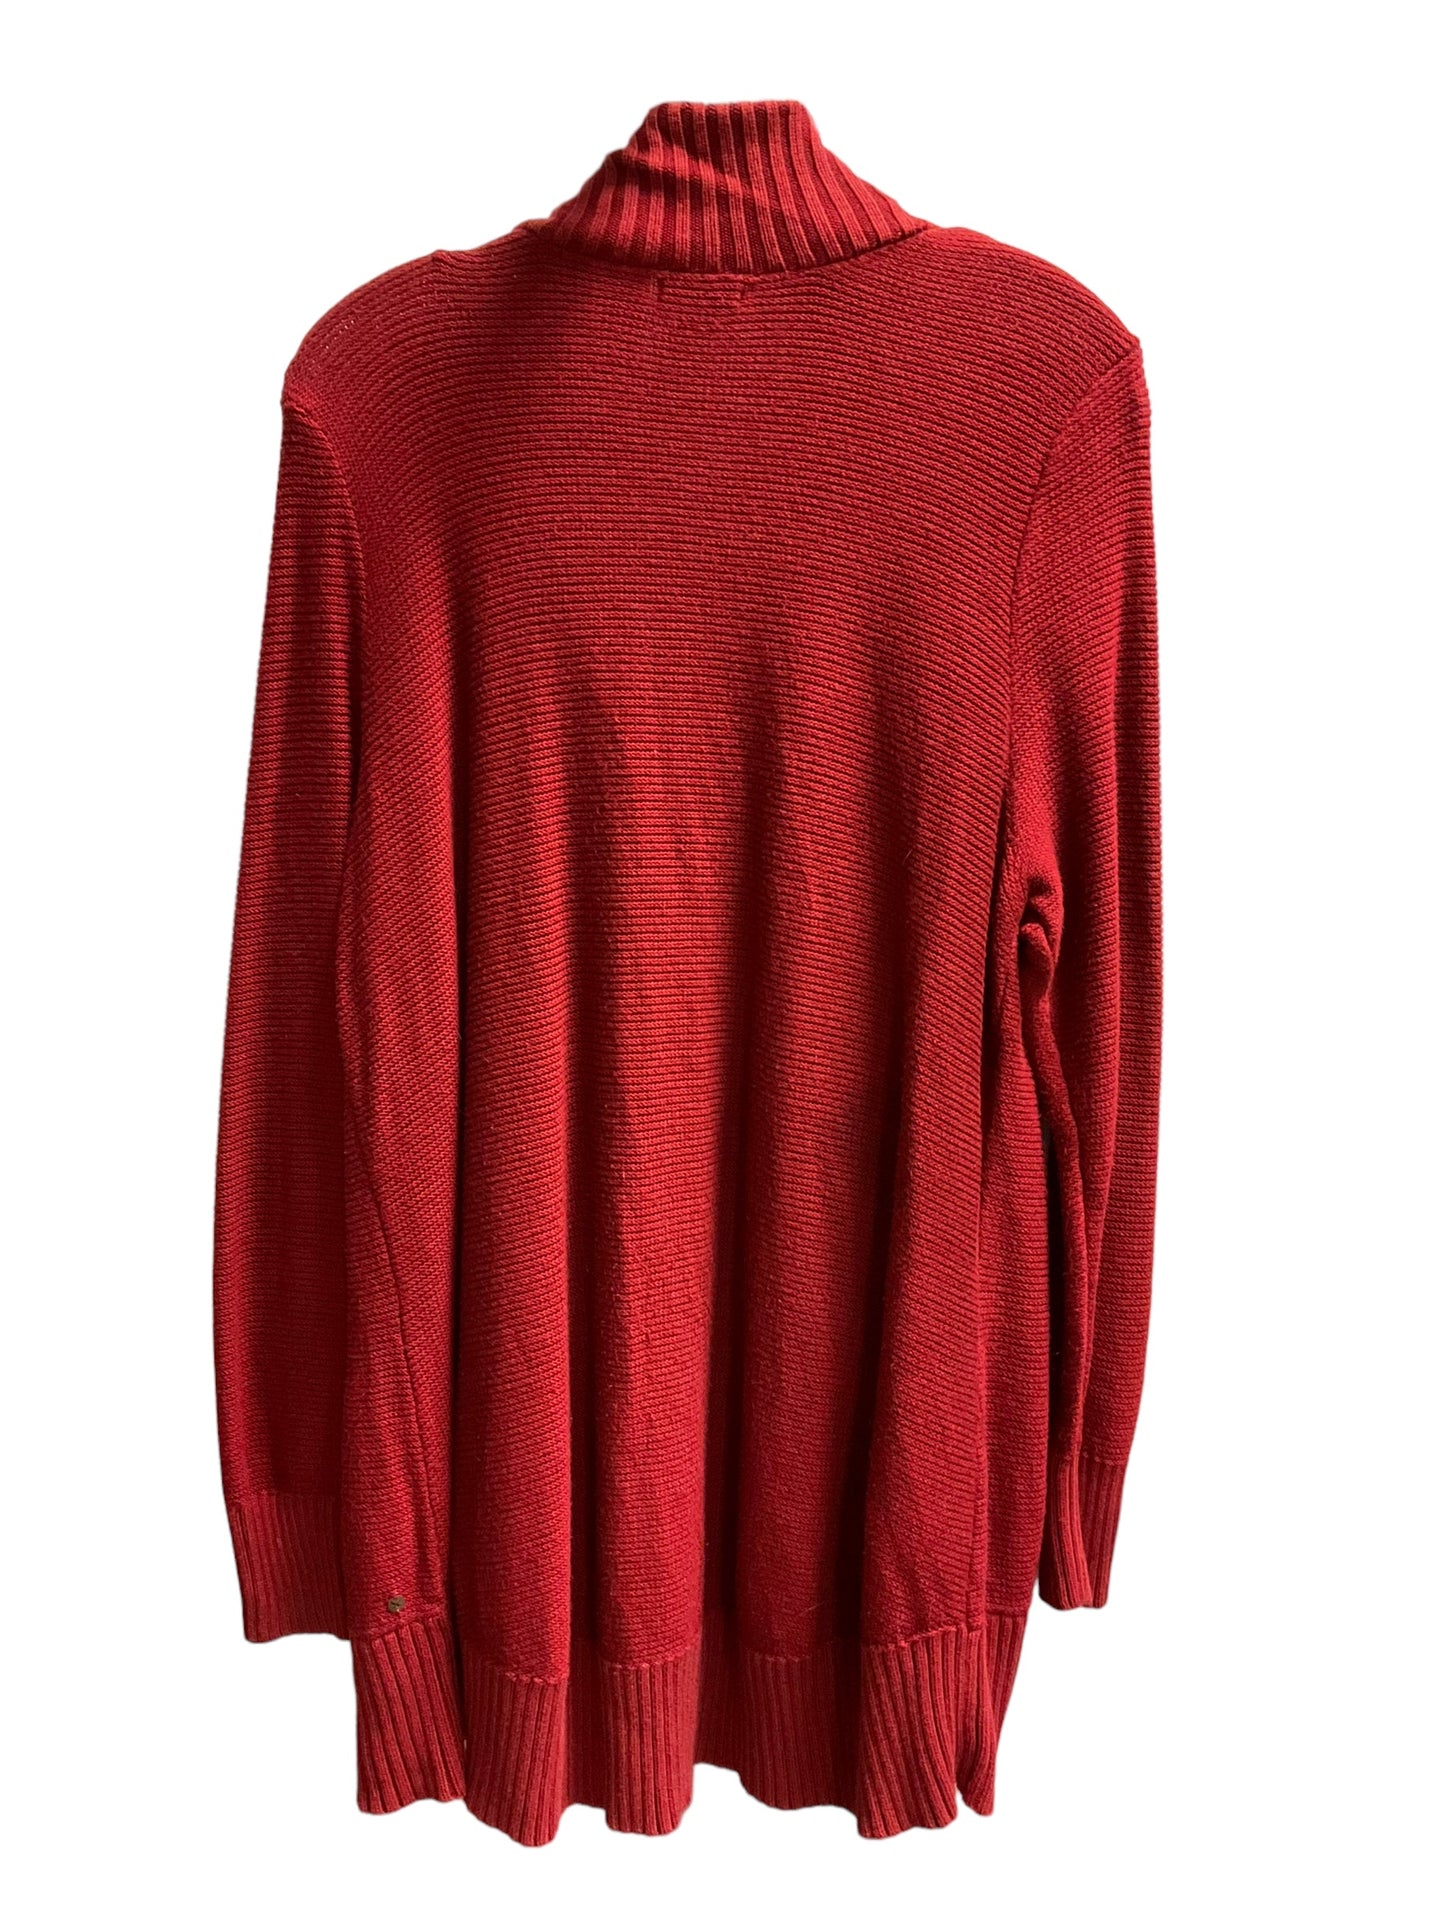 Sweater Cardigan By Eddie Bauer  Size: 2x